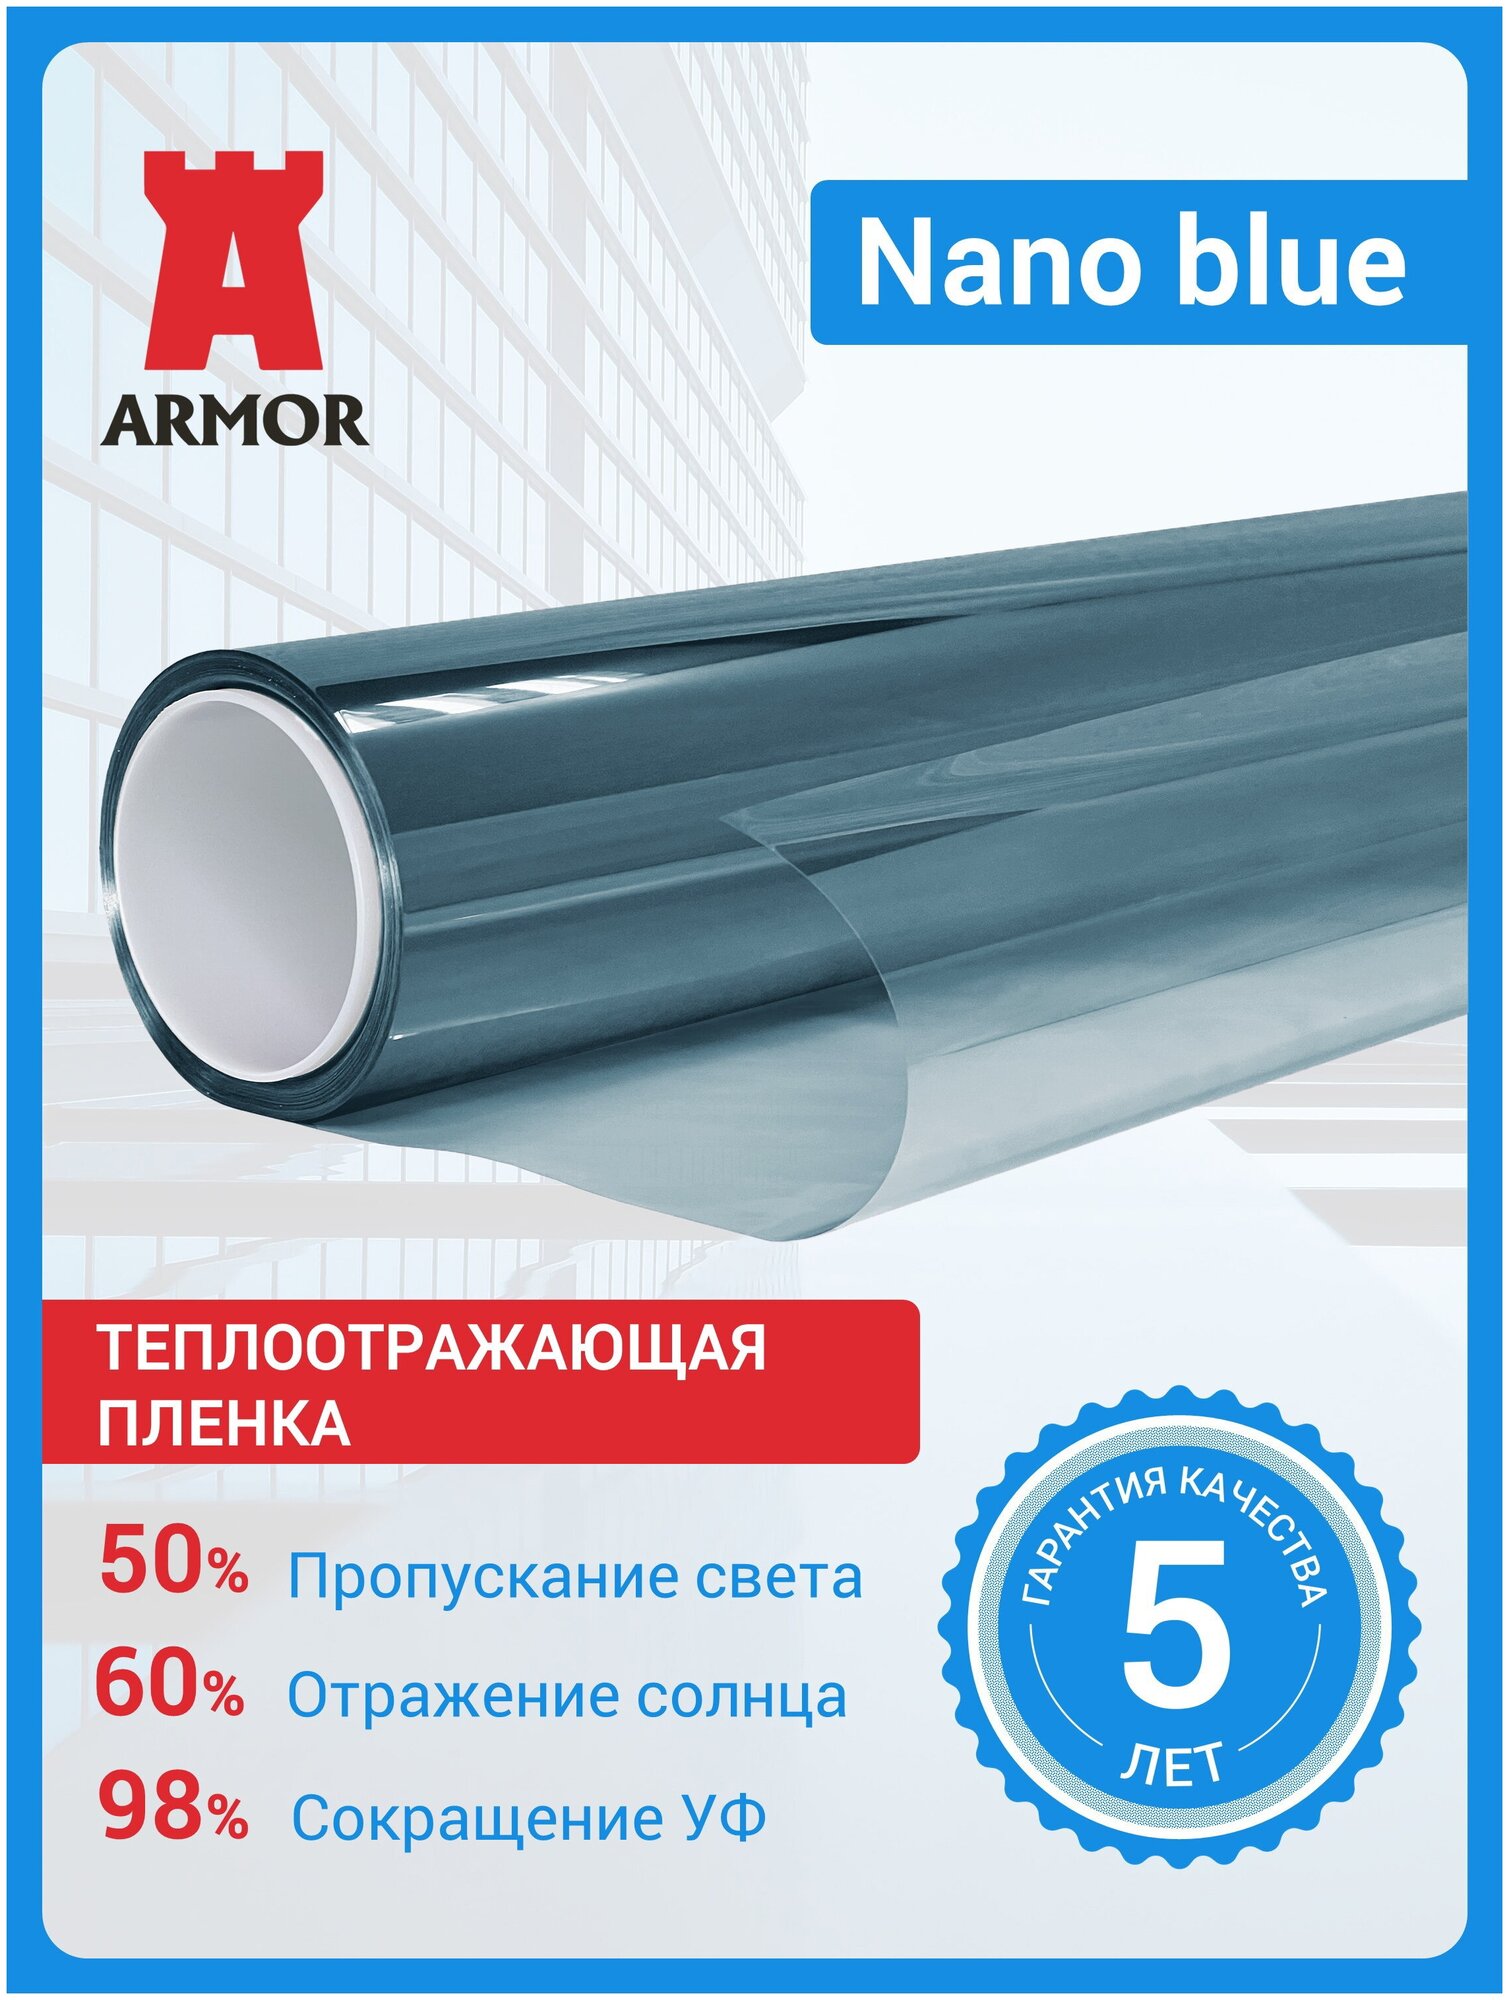 Самоклеящаяся теплоотражающая пленка для окон Nano Blue, цвет - голубой, размер 0,75 м. х 2 м. (75х200см)